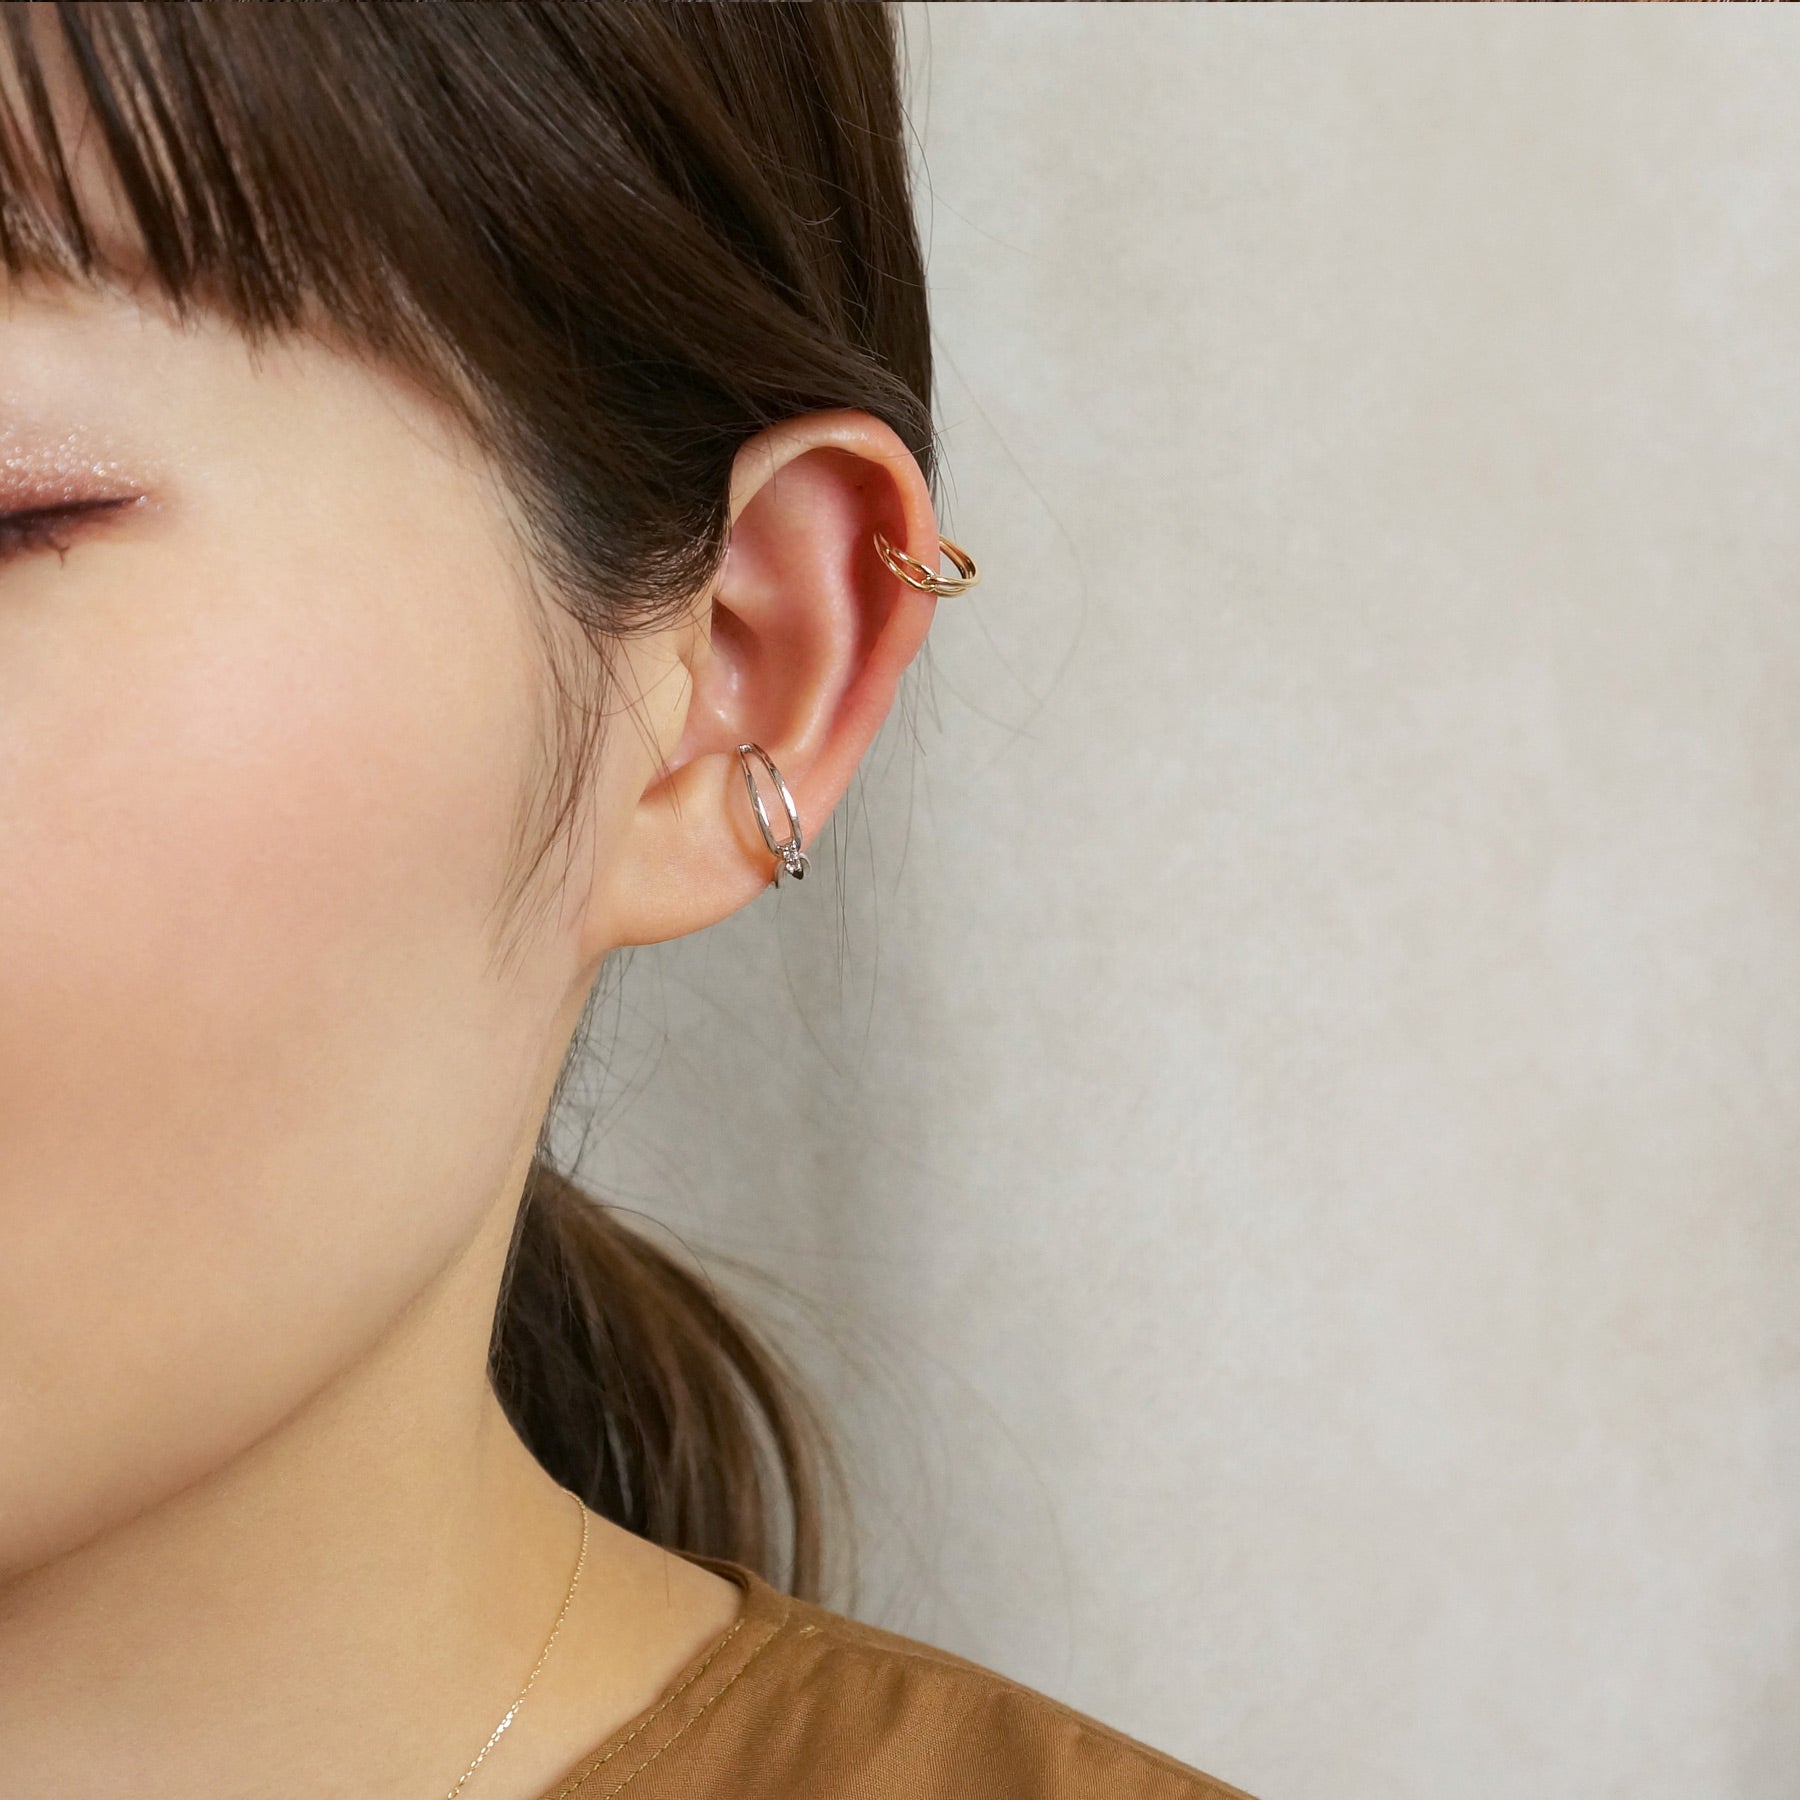 10K Gold / 925 Sterling Silver Infinity Ear Cuff Set - Model Image